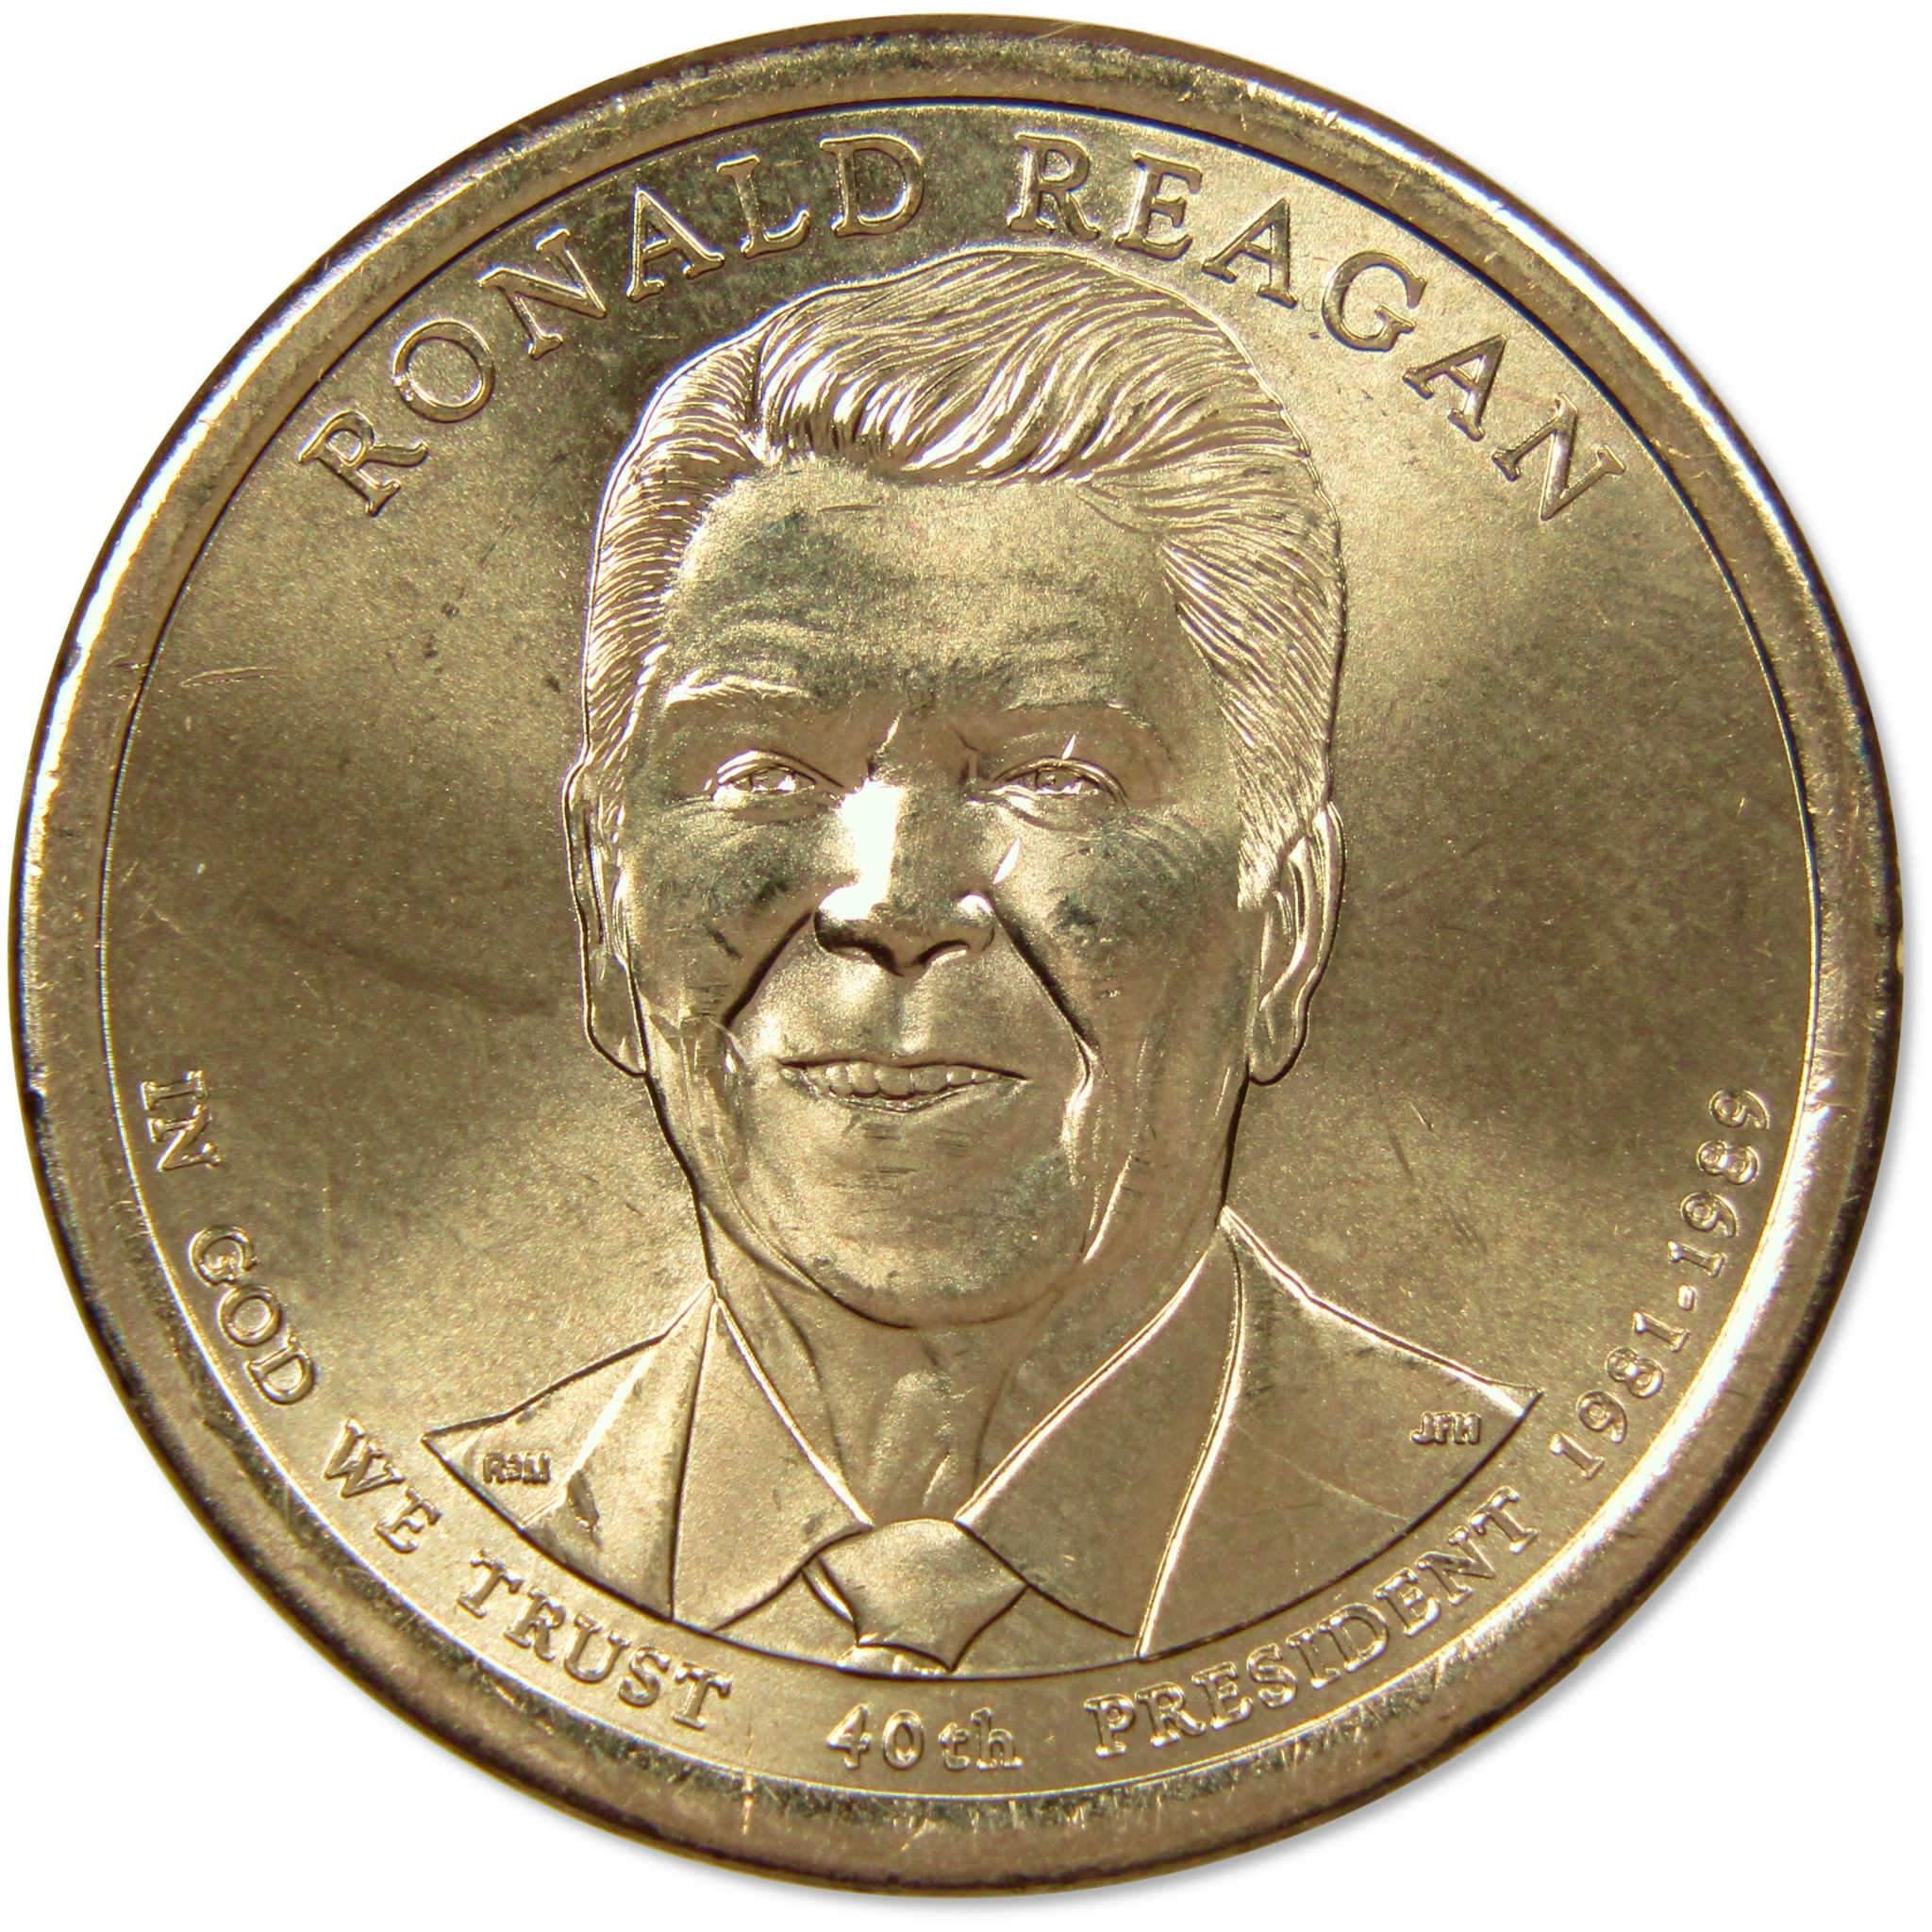 2016 P&D Ronald Reagan Presidential Dollar 2 Piece Set BU Uncirculated $1 Coins